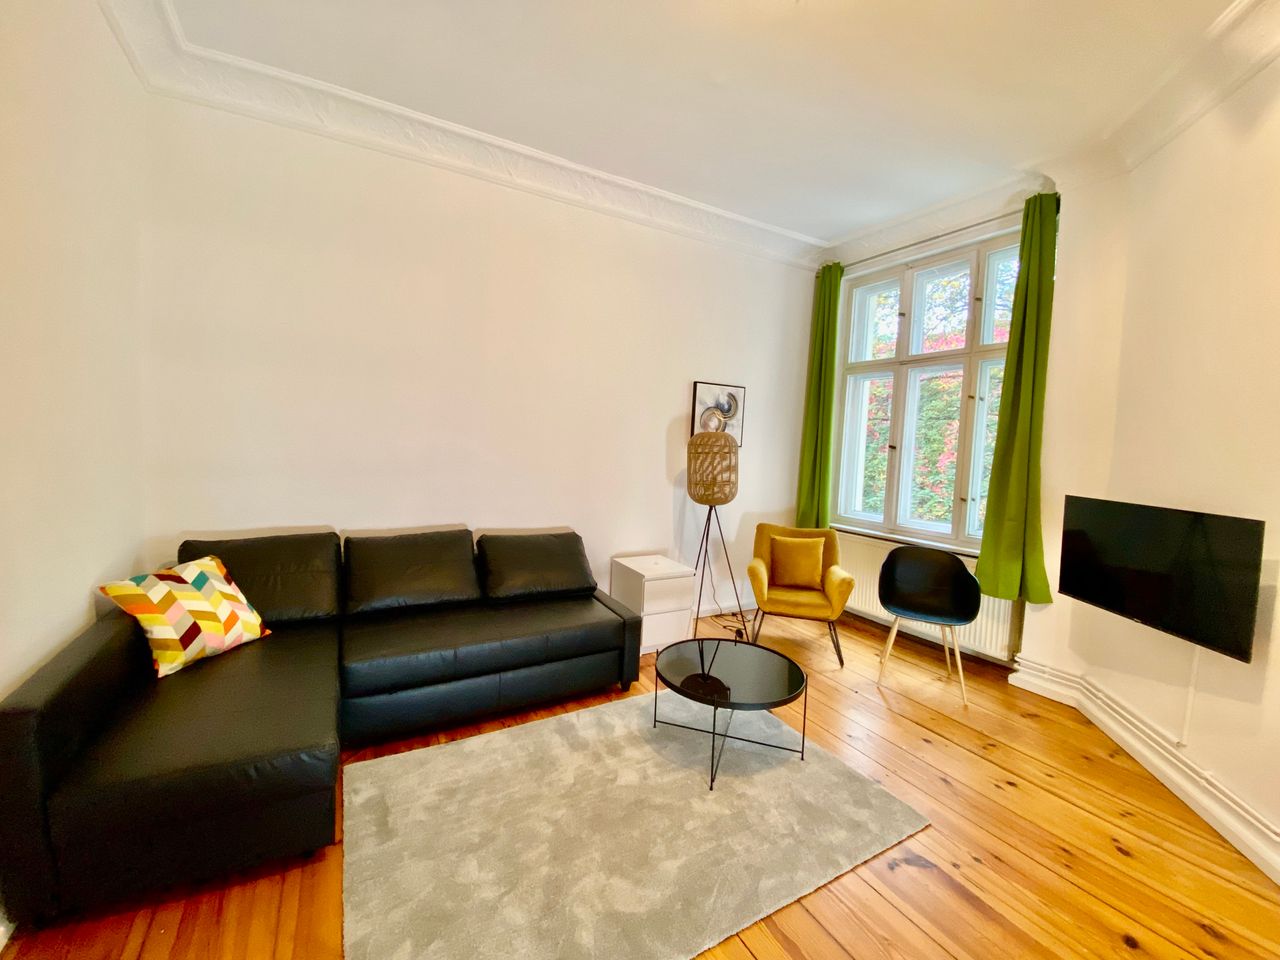 'EBONY' - beautiful 2 room apartment in super location in Friedrichshain